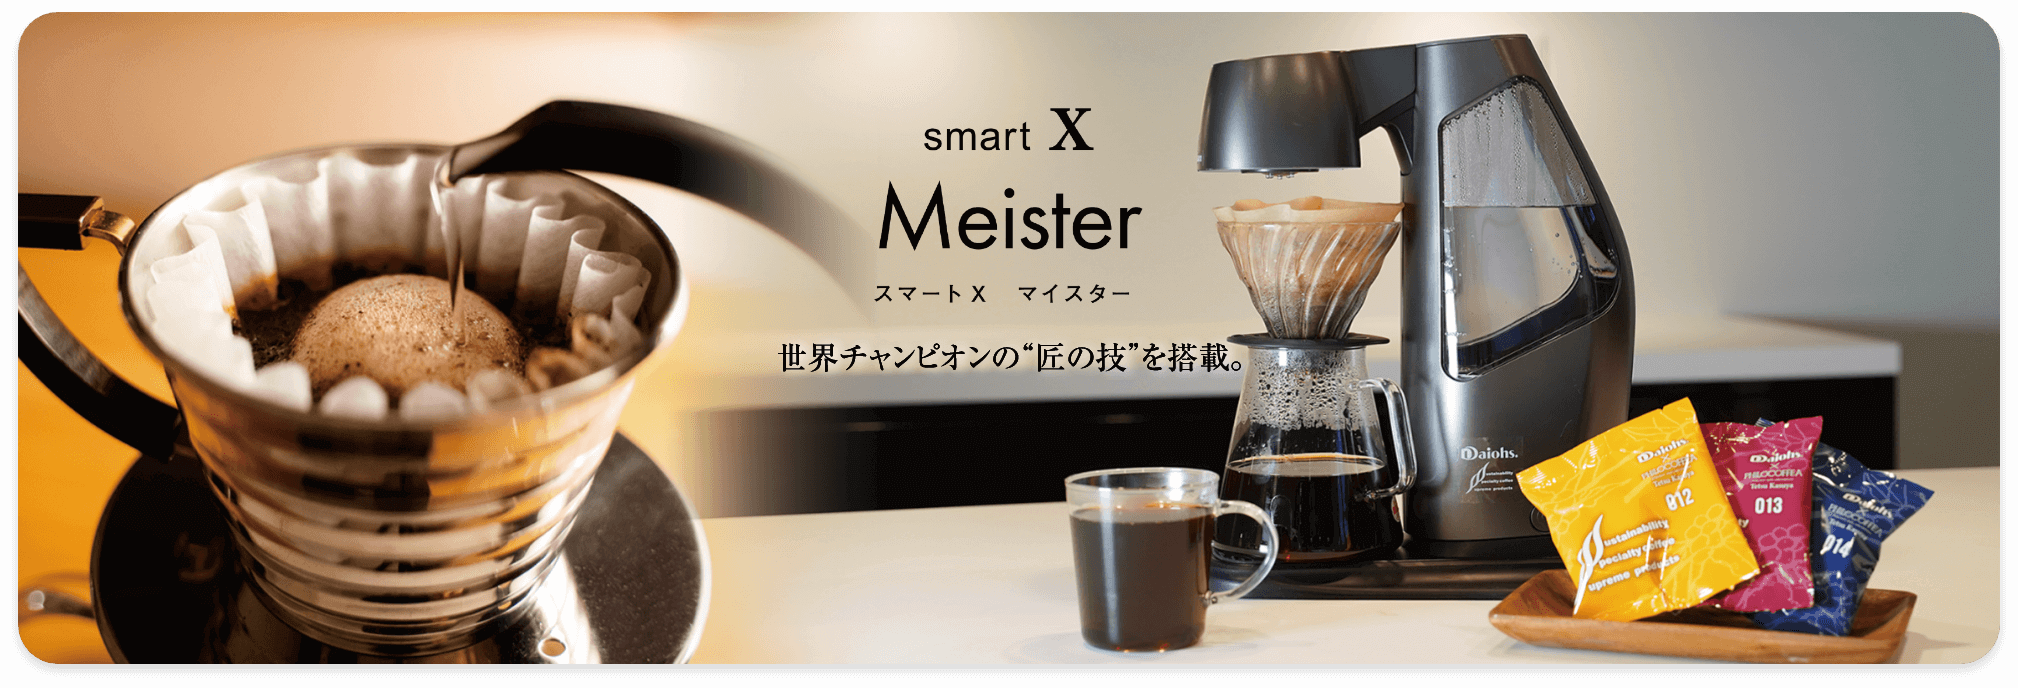 smart X Meister 世界チャンピオンの匠の技を掲載